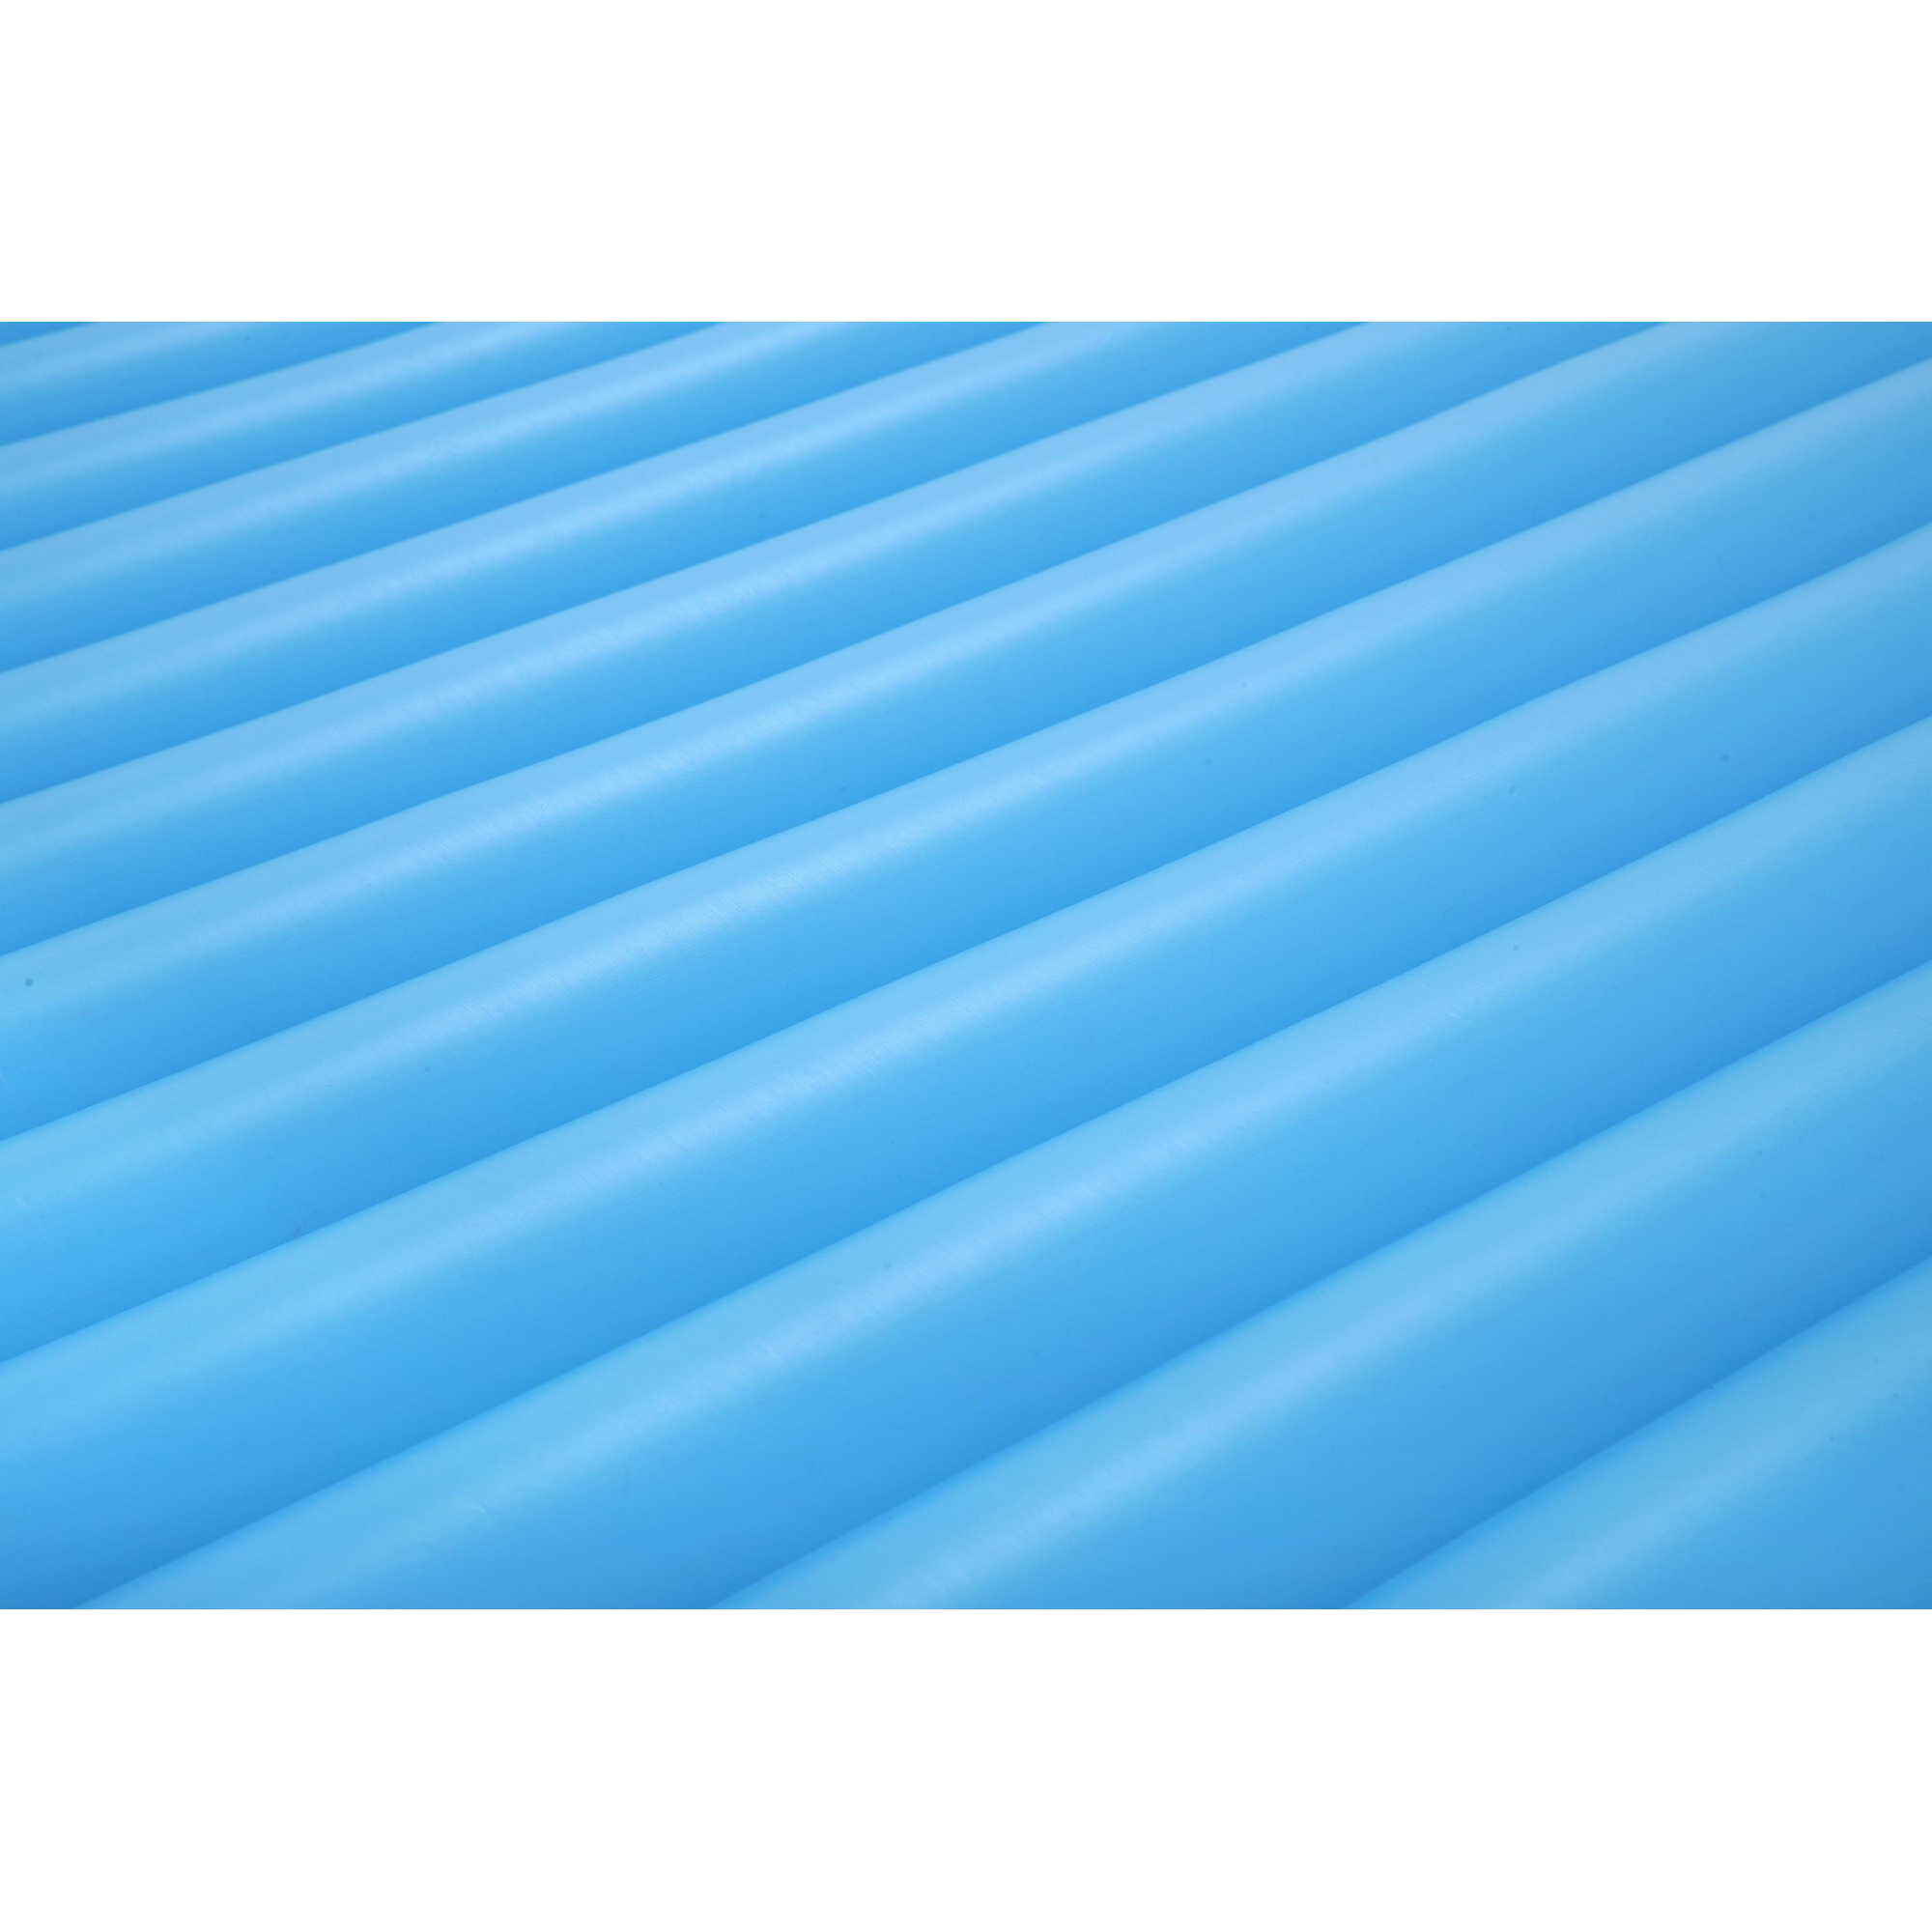 Schwimmende Plattform 'Hydro-Force Sun Soaker' blau 290 x 191 cm + product picture